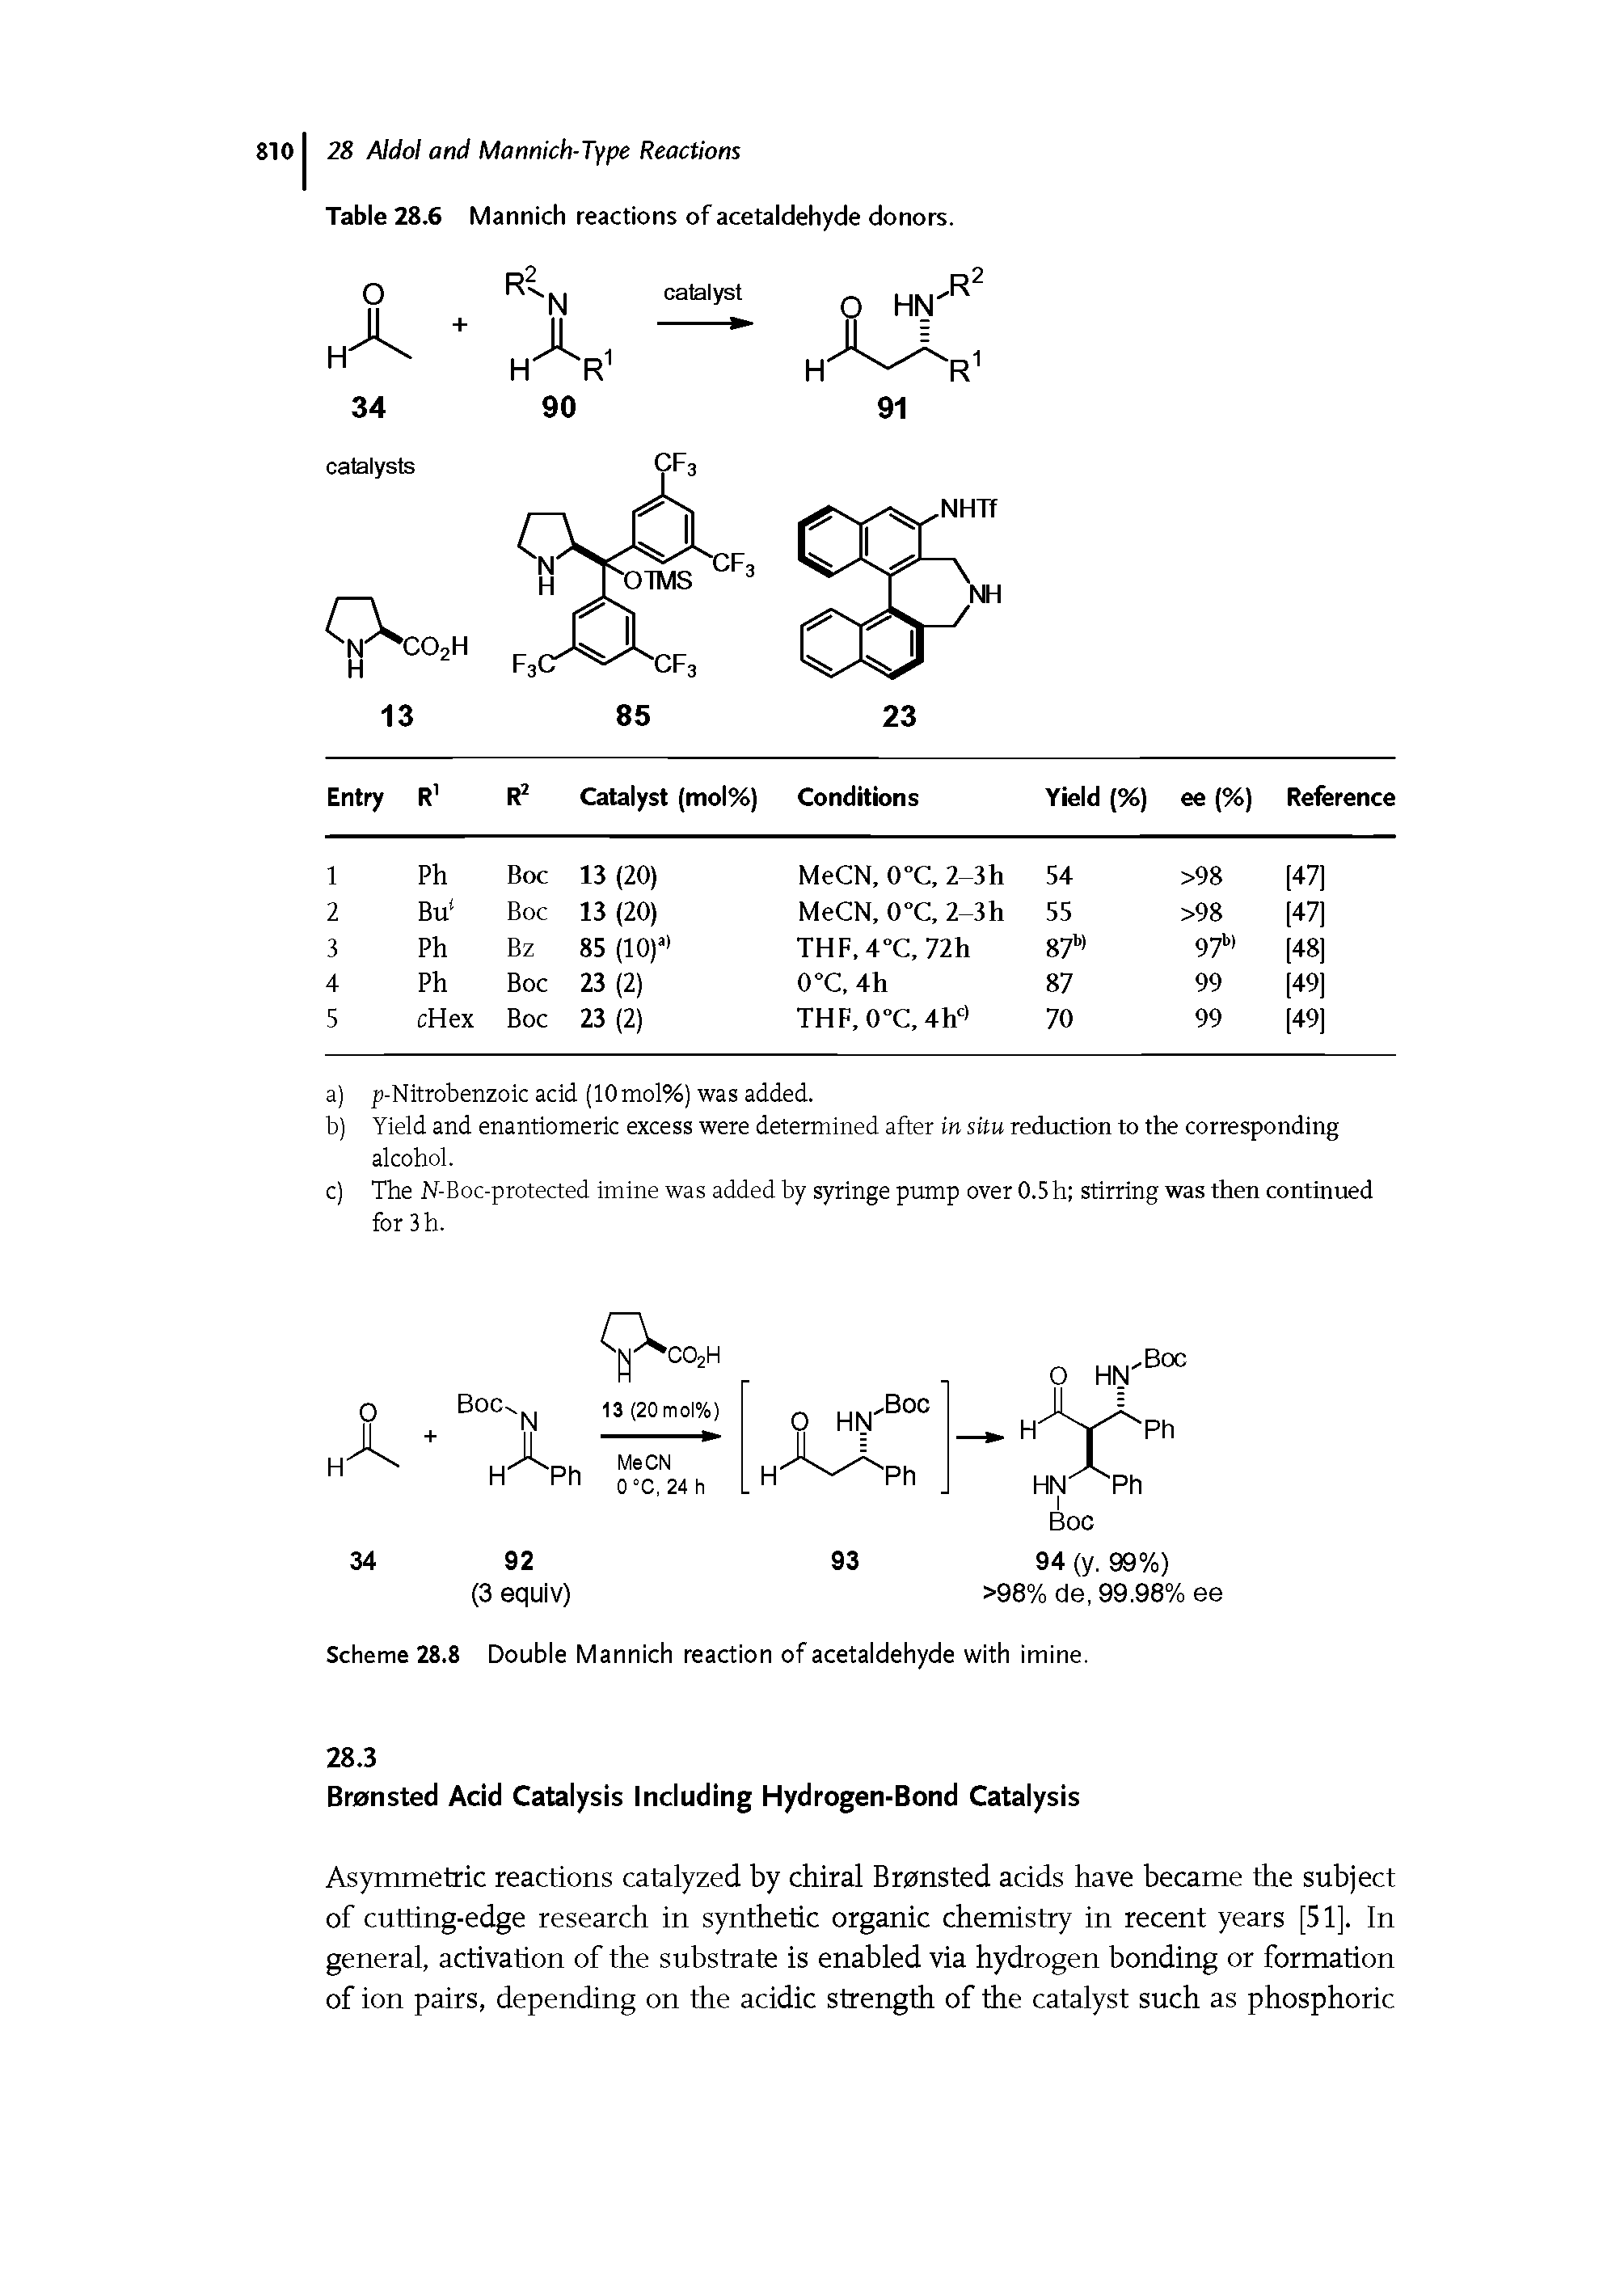 Scheme 28.8 Double Mannich reaction of acetaldehyde with imine.